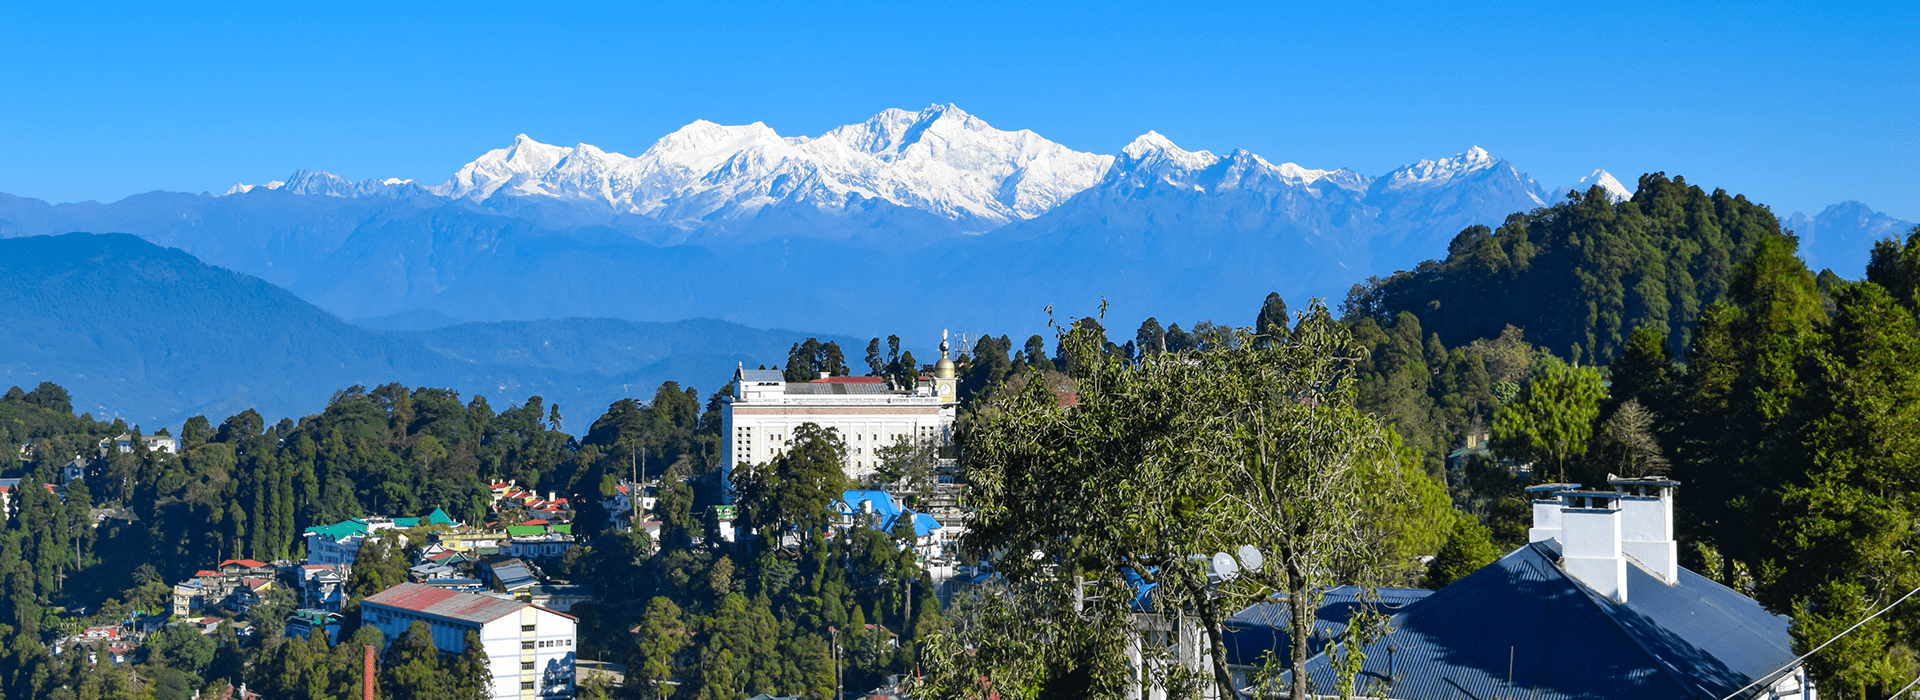 Darjeeling-Sikkim Tour Packages